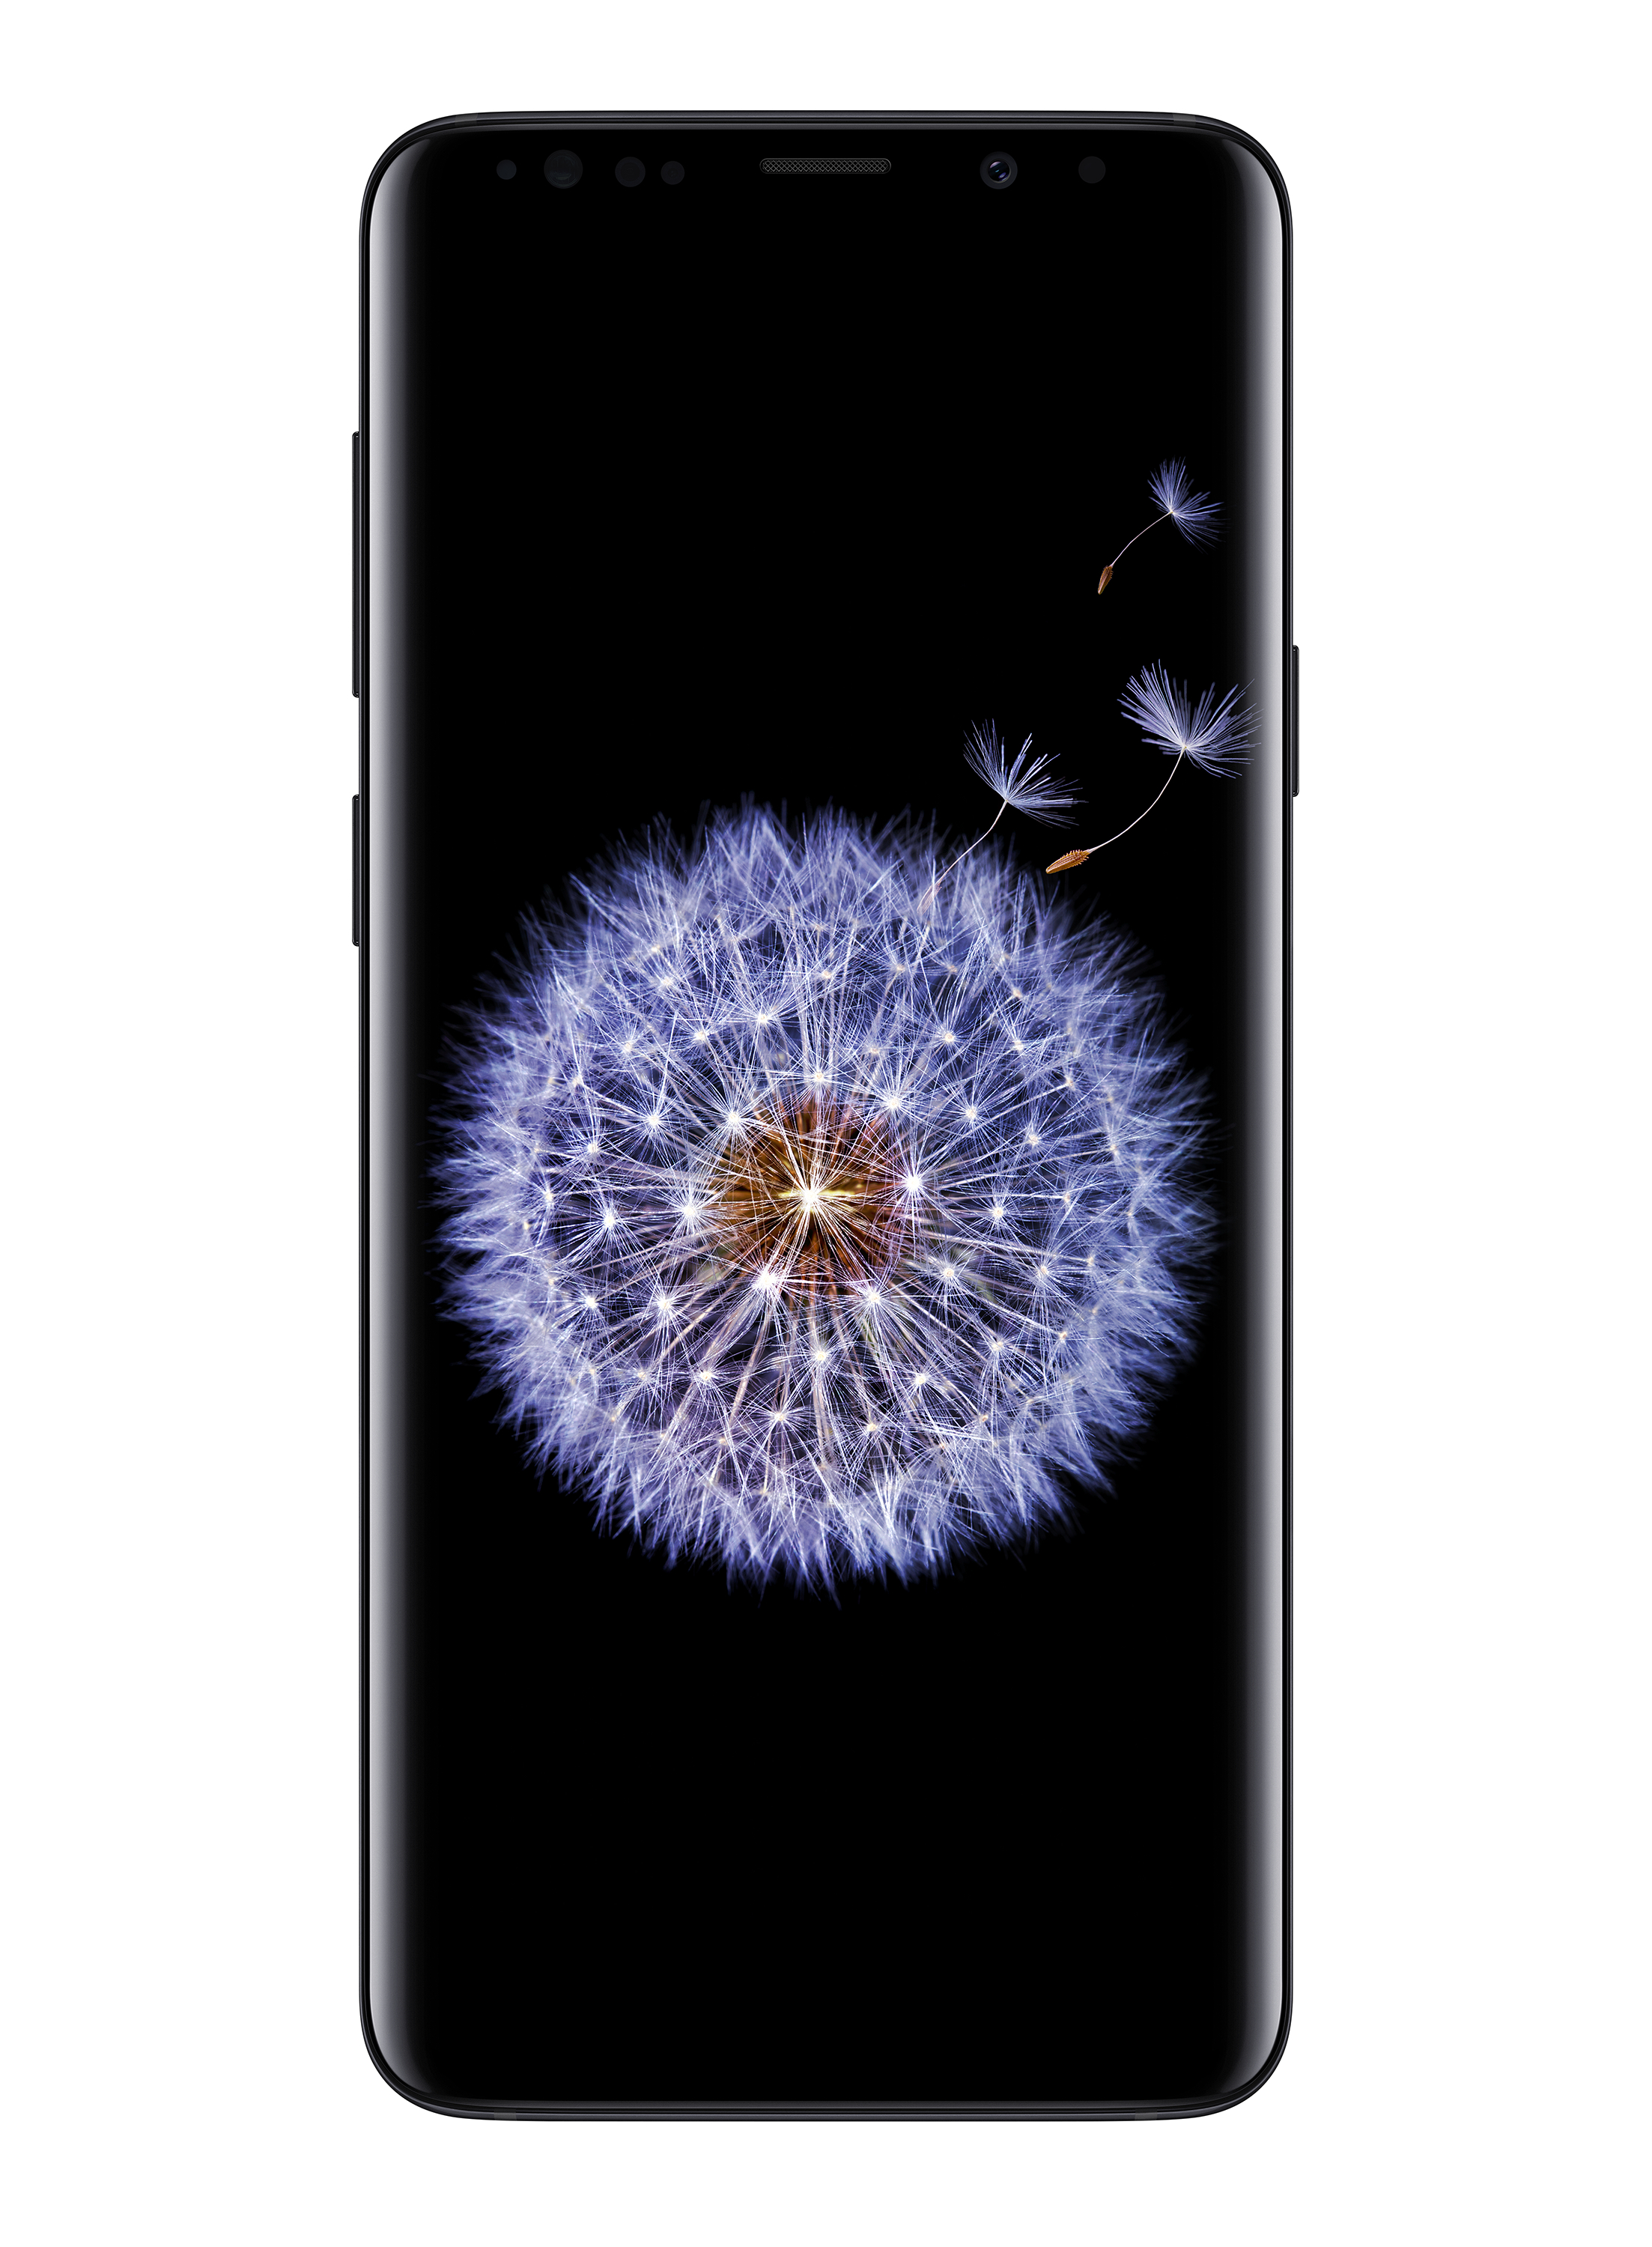 SAMSUNG Galaxy S9+ 64gb Unlocked Smartphone, Black - image 1 of 5